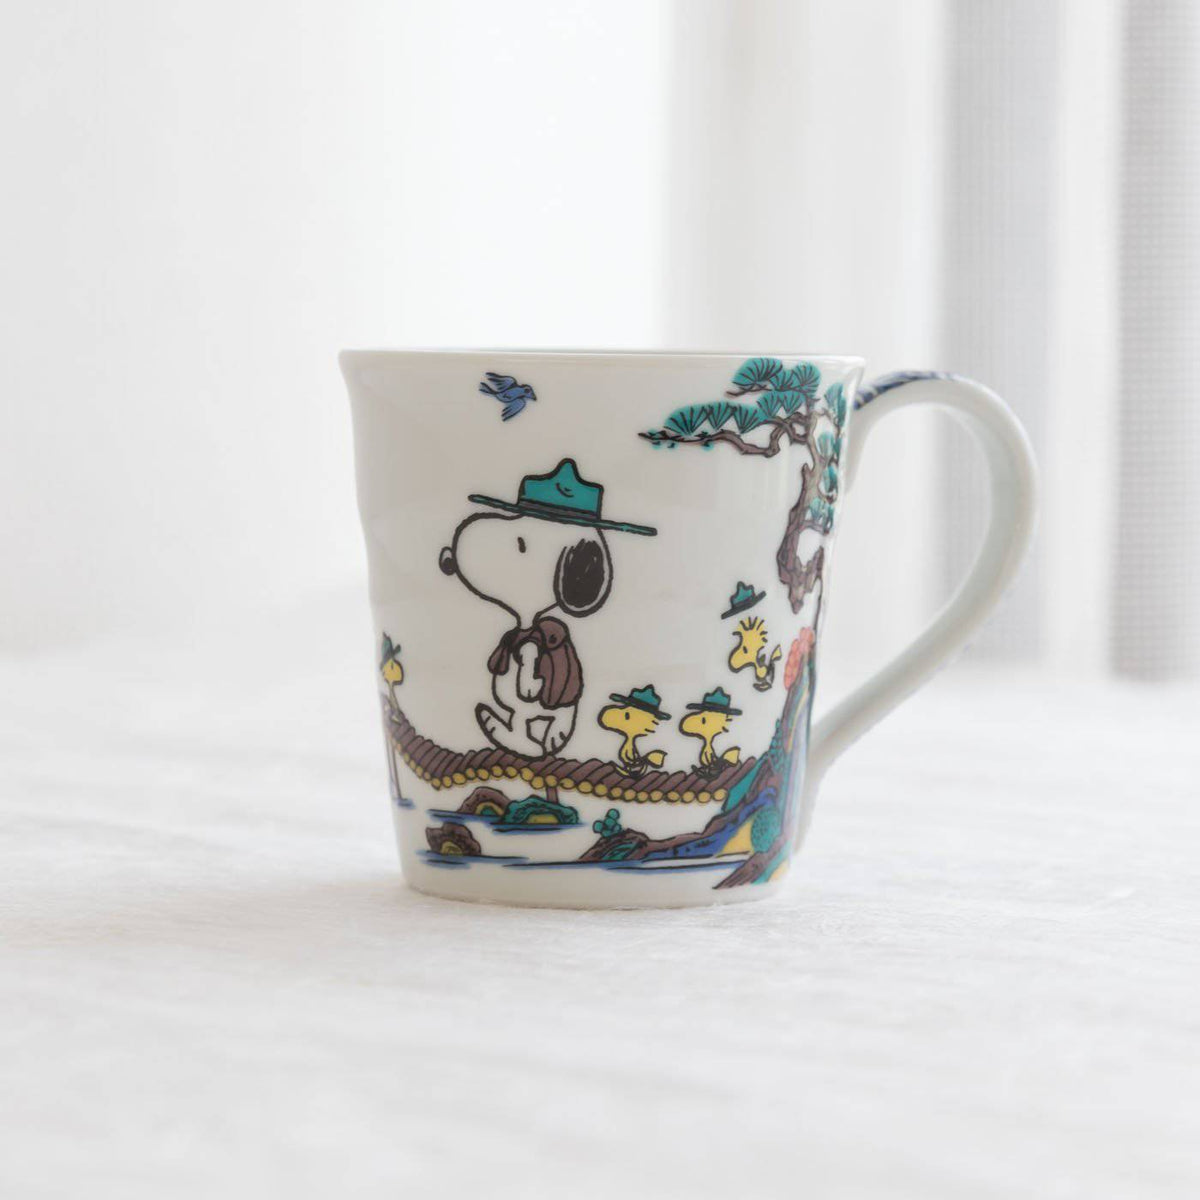 Yamaka 70th Snoopy Year's Mug Cup 2020 Beige Made in Japan 